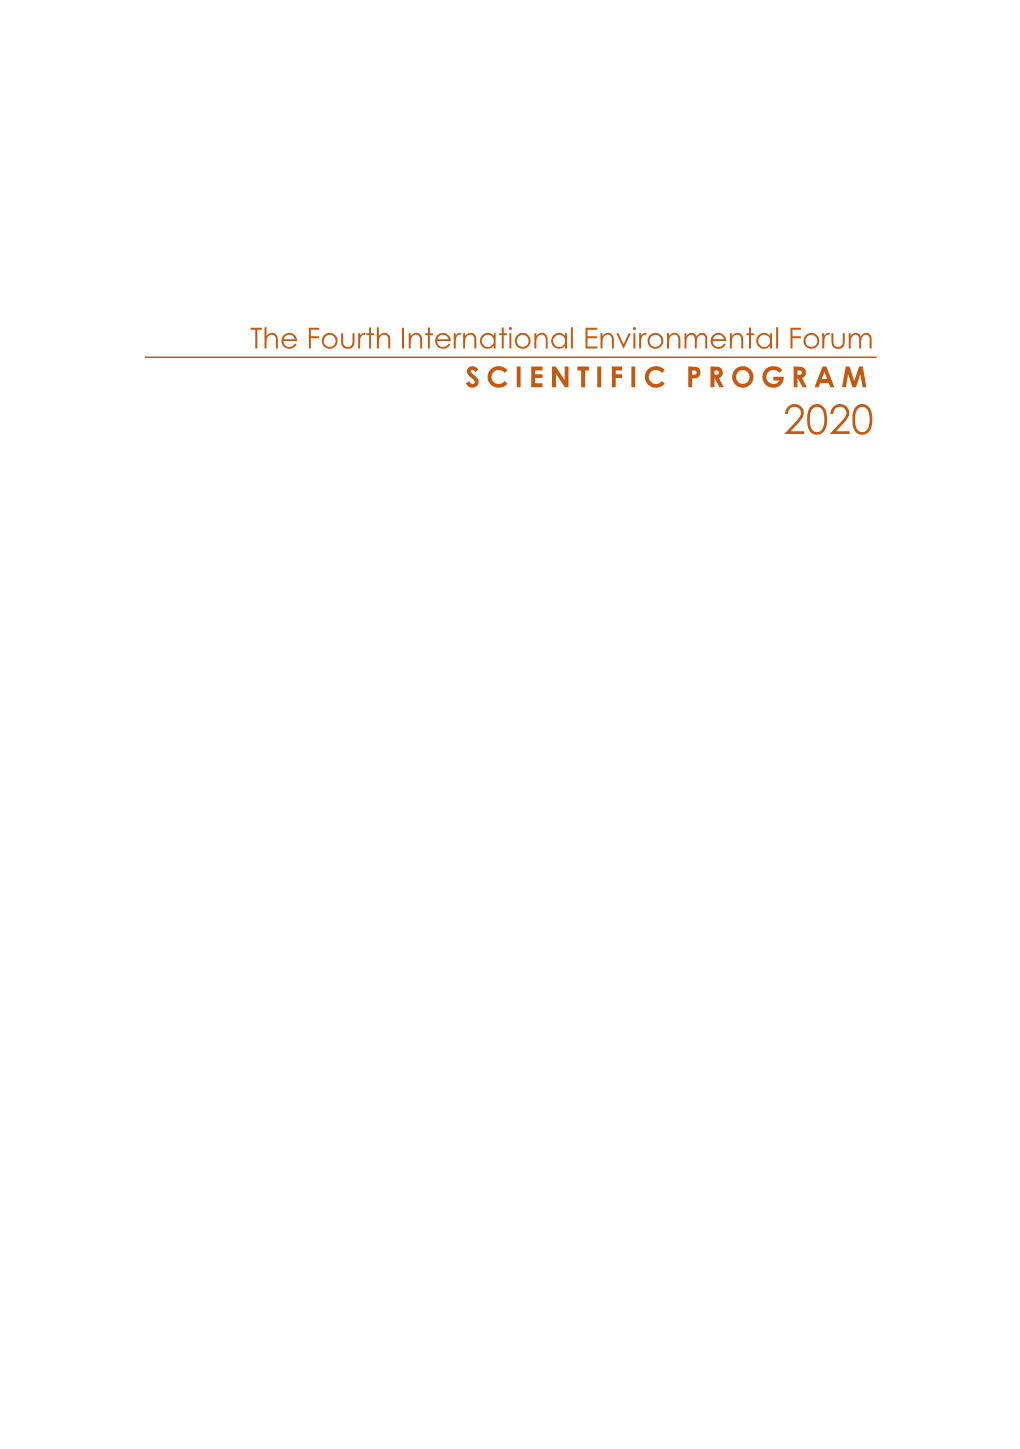 The Fourth International Environmental Forum SCIENTIFIC PROGRAM 2020